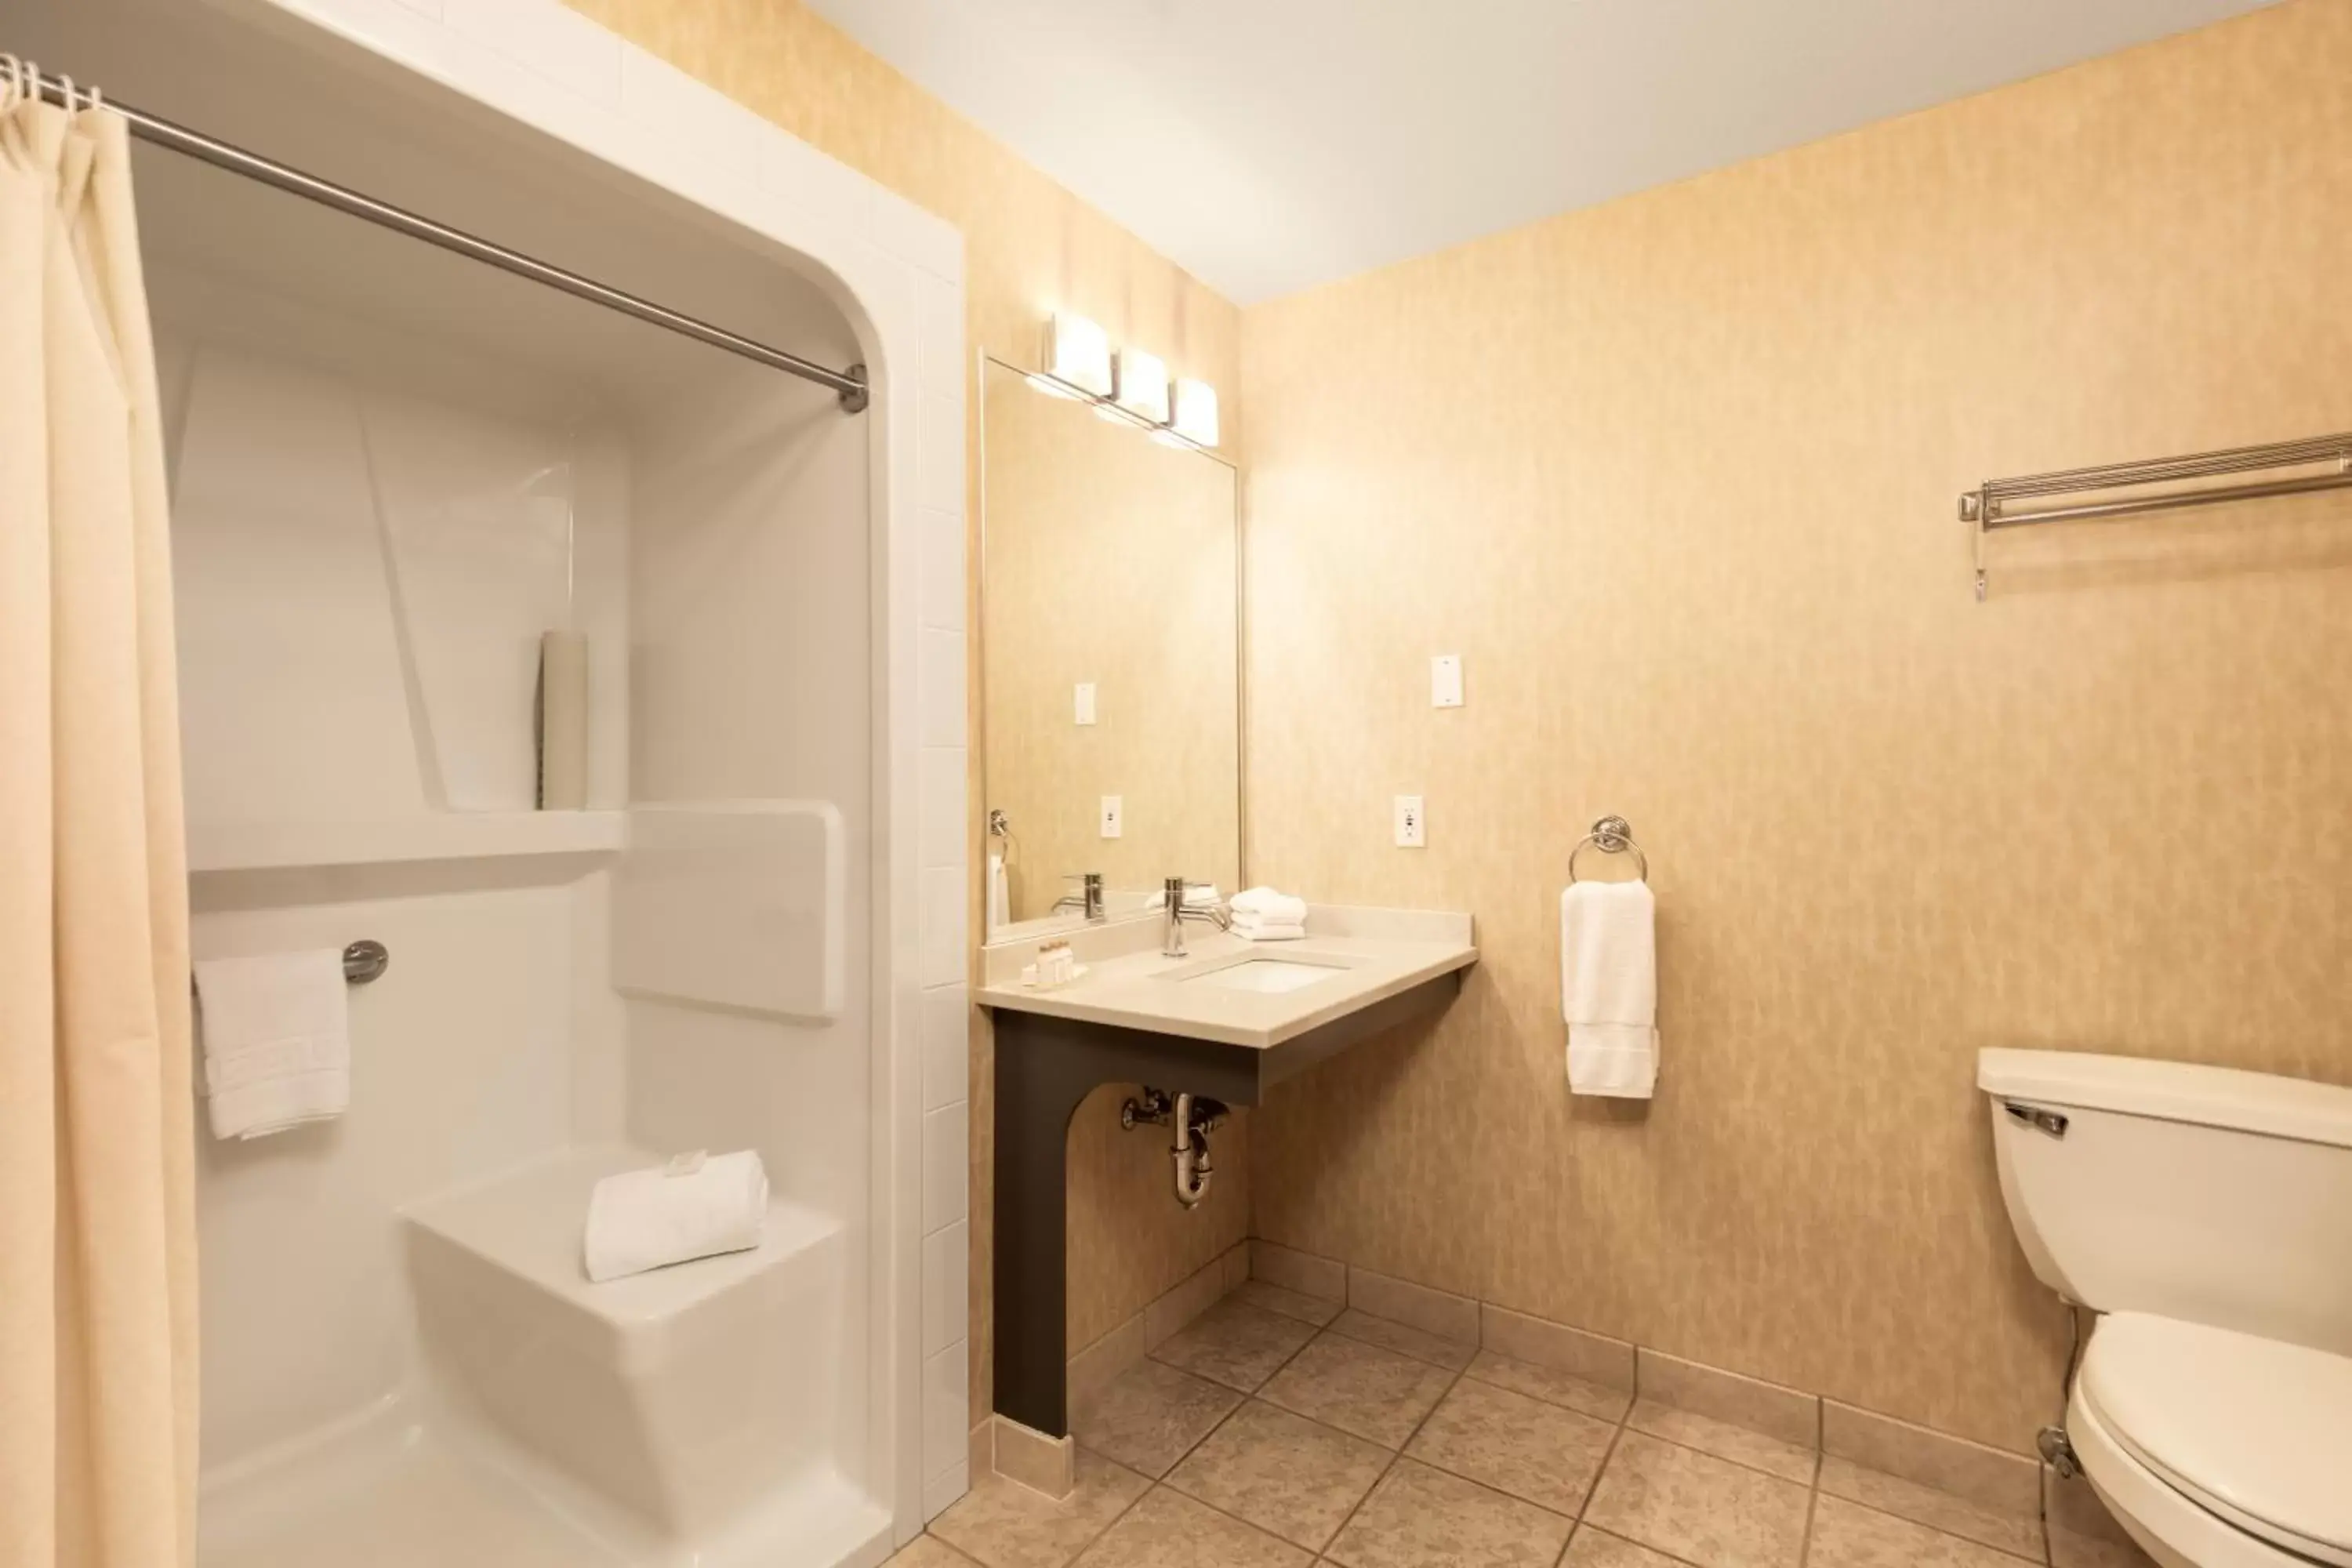 Facility for disabled guests, Bathroom in Manteo at Eldorado Resort